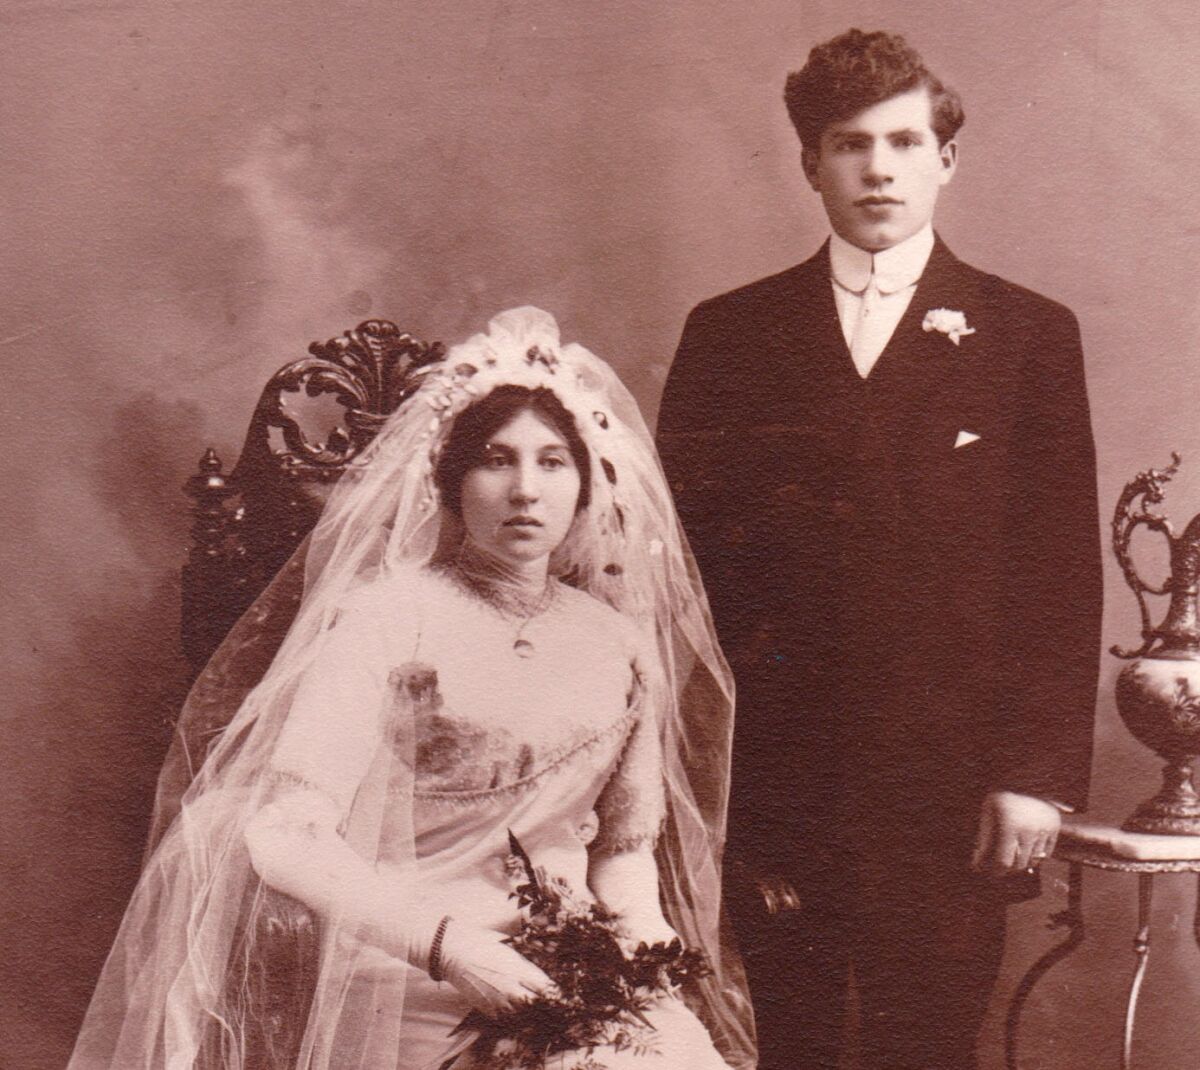 Sarah and Max Landsberg wedding portrait in December 1912.